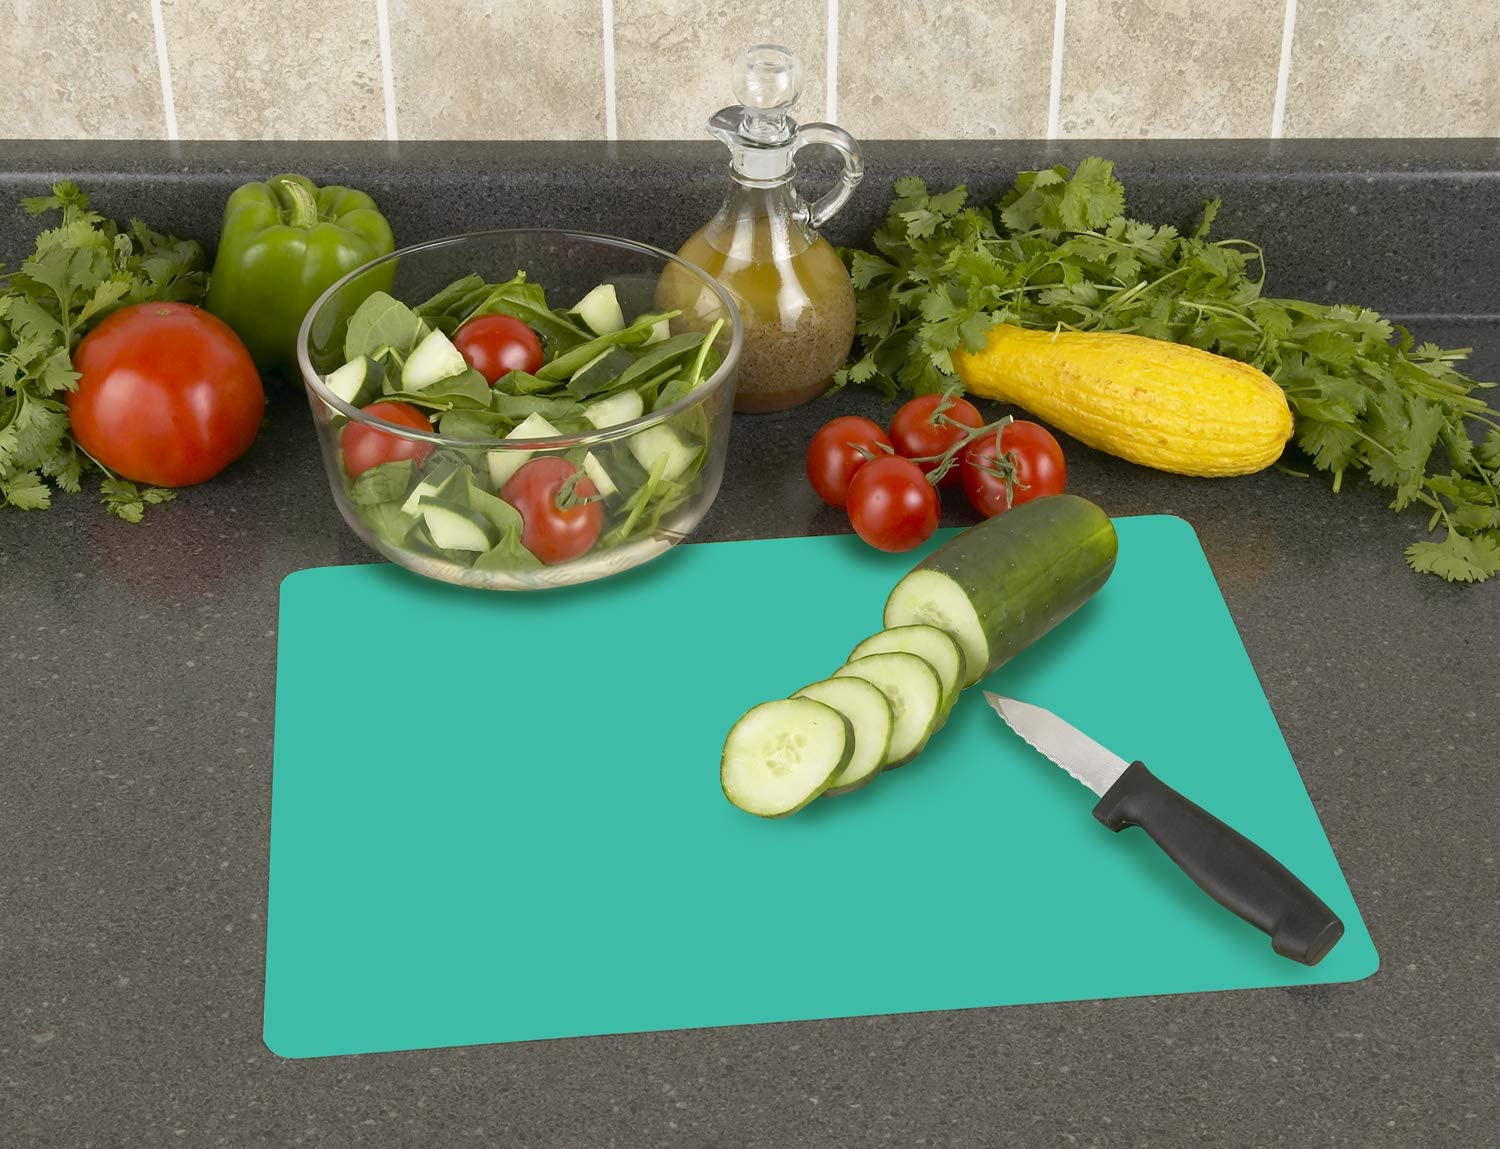 Chop Chop Cutting Mats, Flexible, Assorted Colors - 4 mats